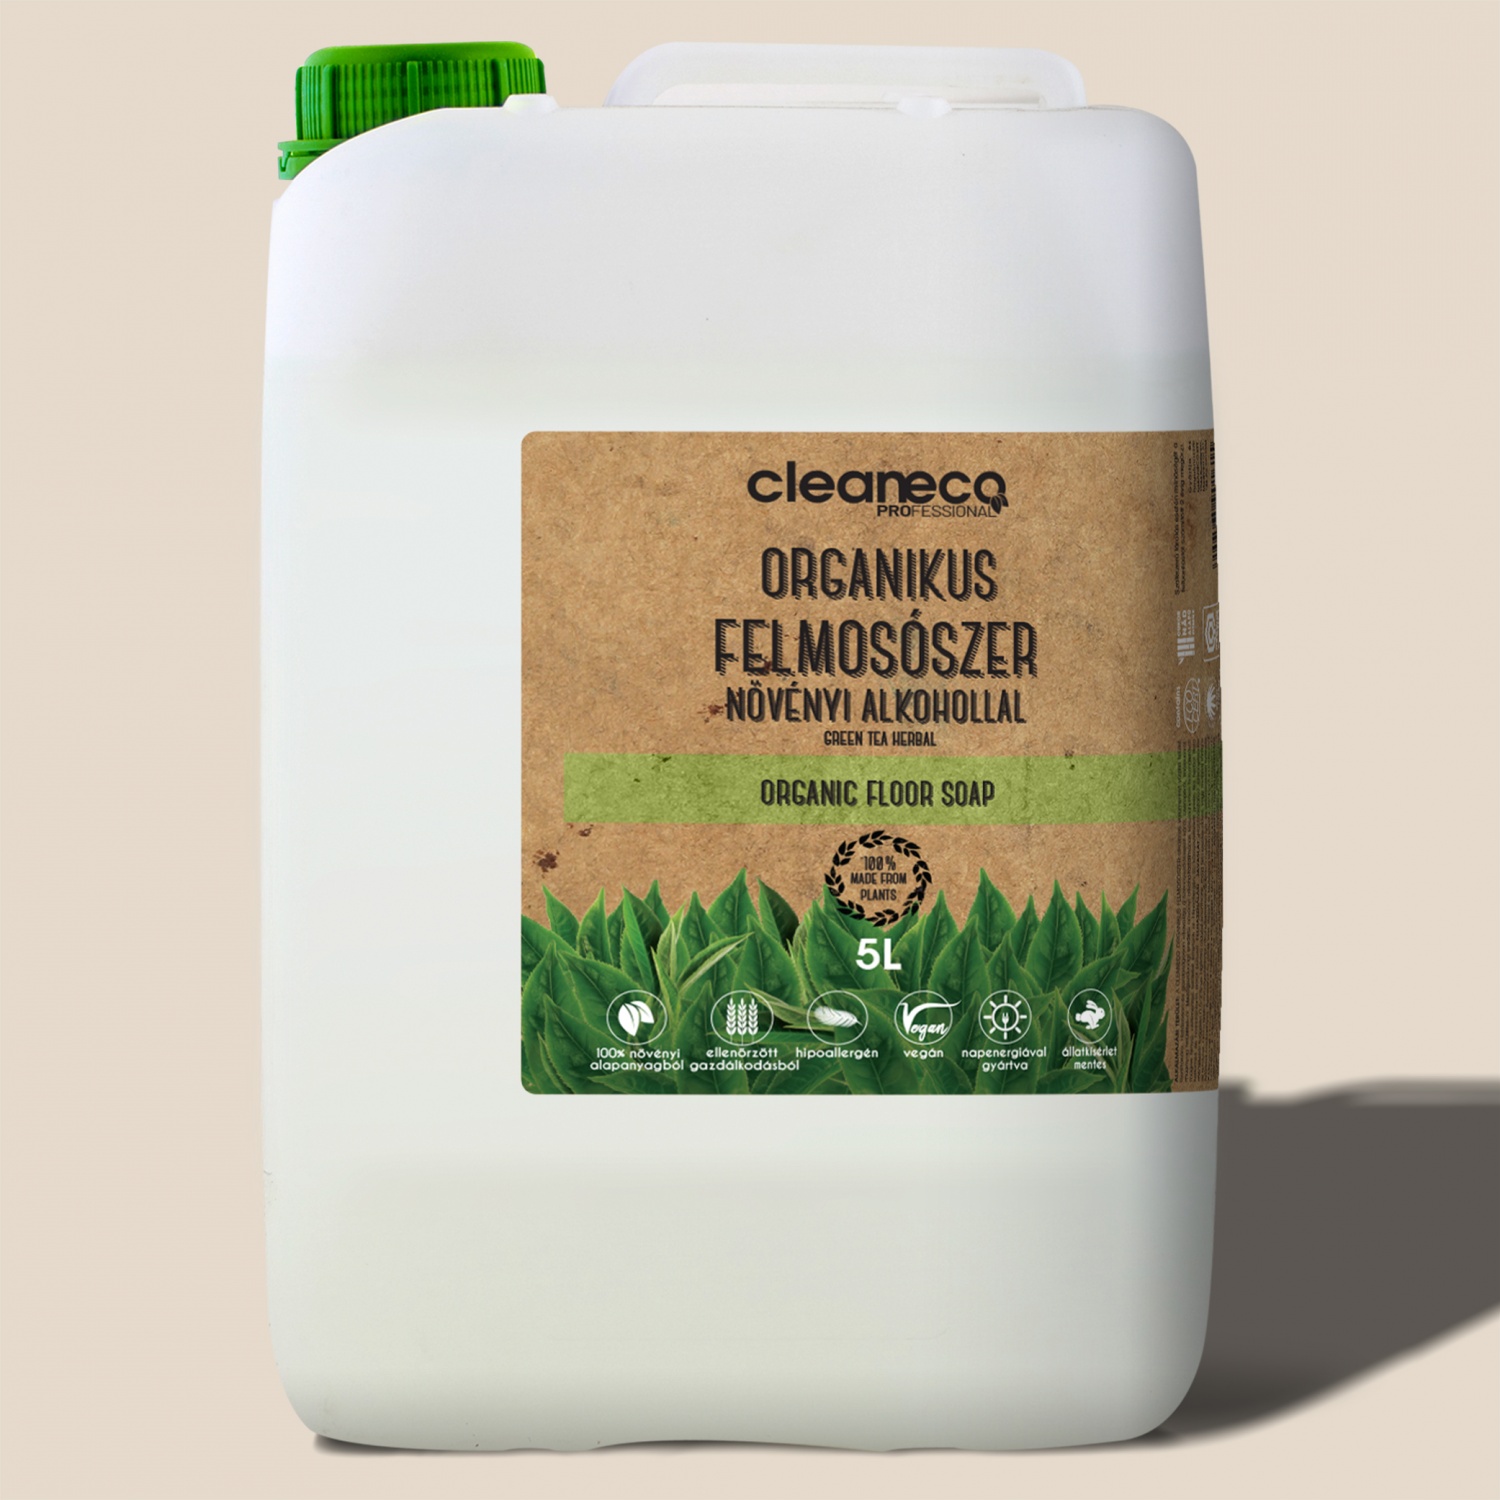 Cleaneco Organikus felmosószer, Green tea herbal illat, XXL, 5liter